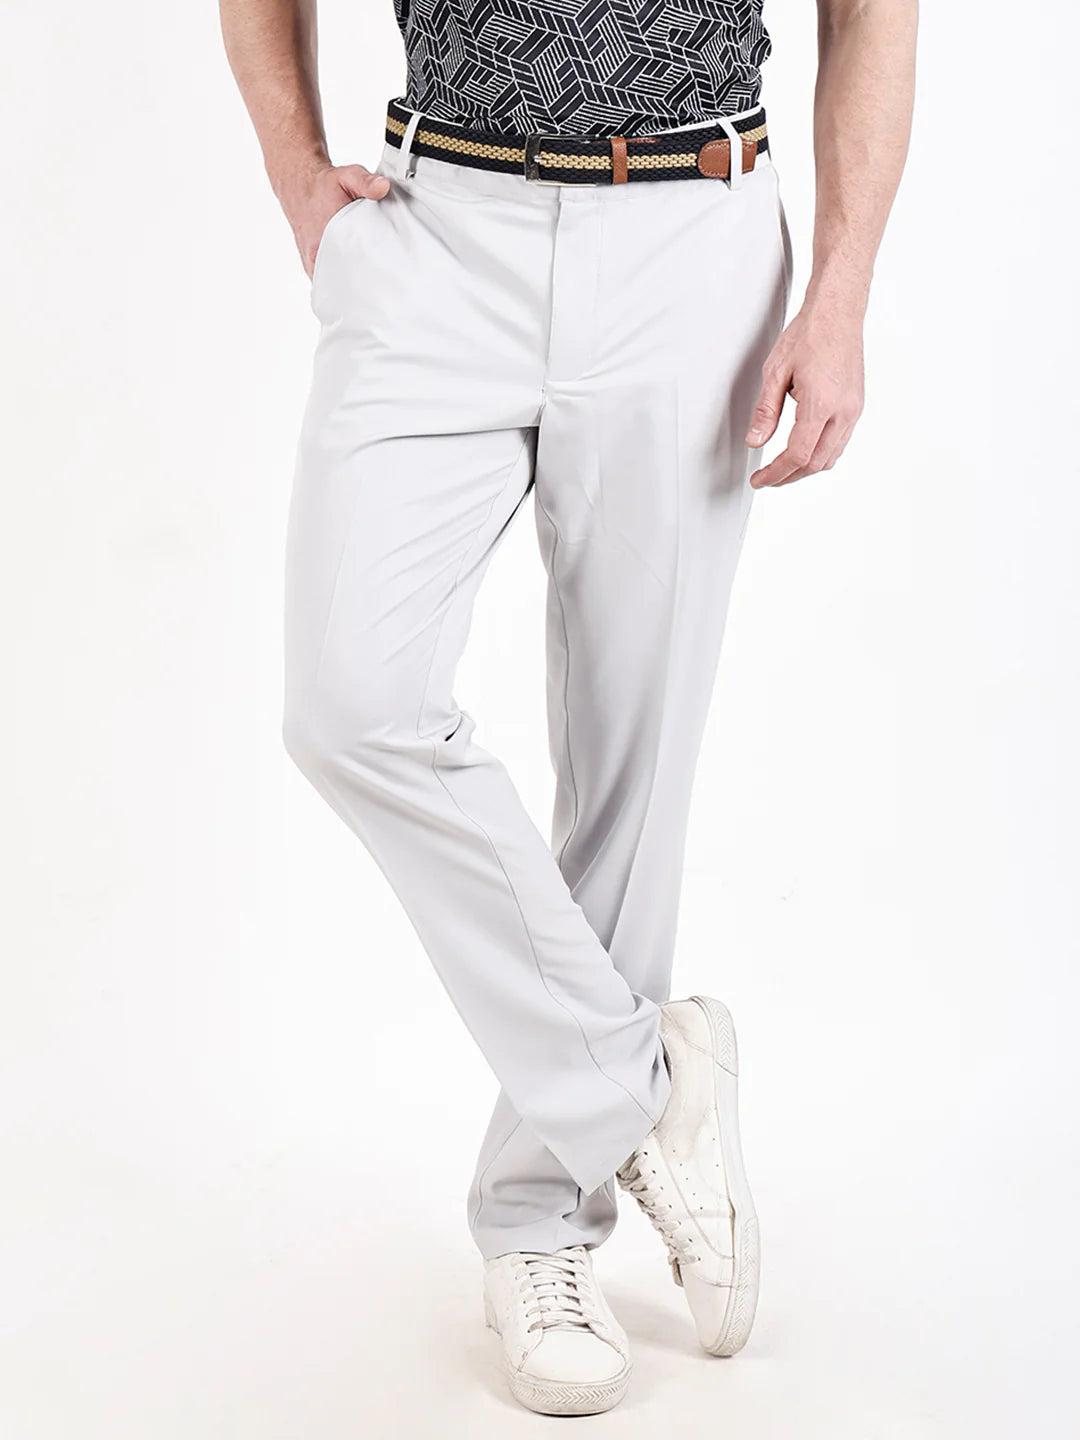 I-GOLF Men's 4-Way Stretchable Golf Trouser